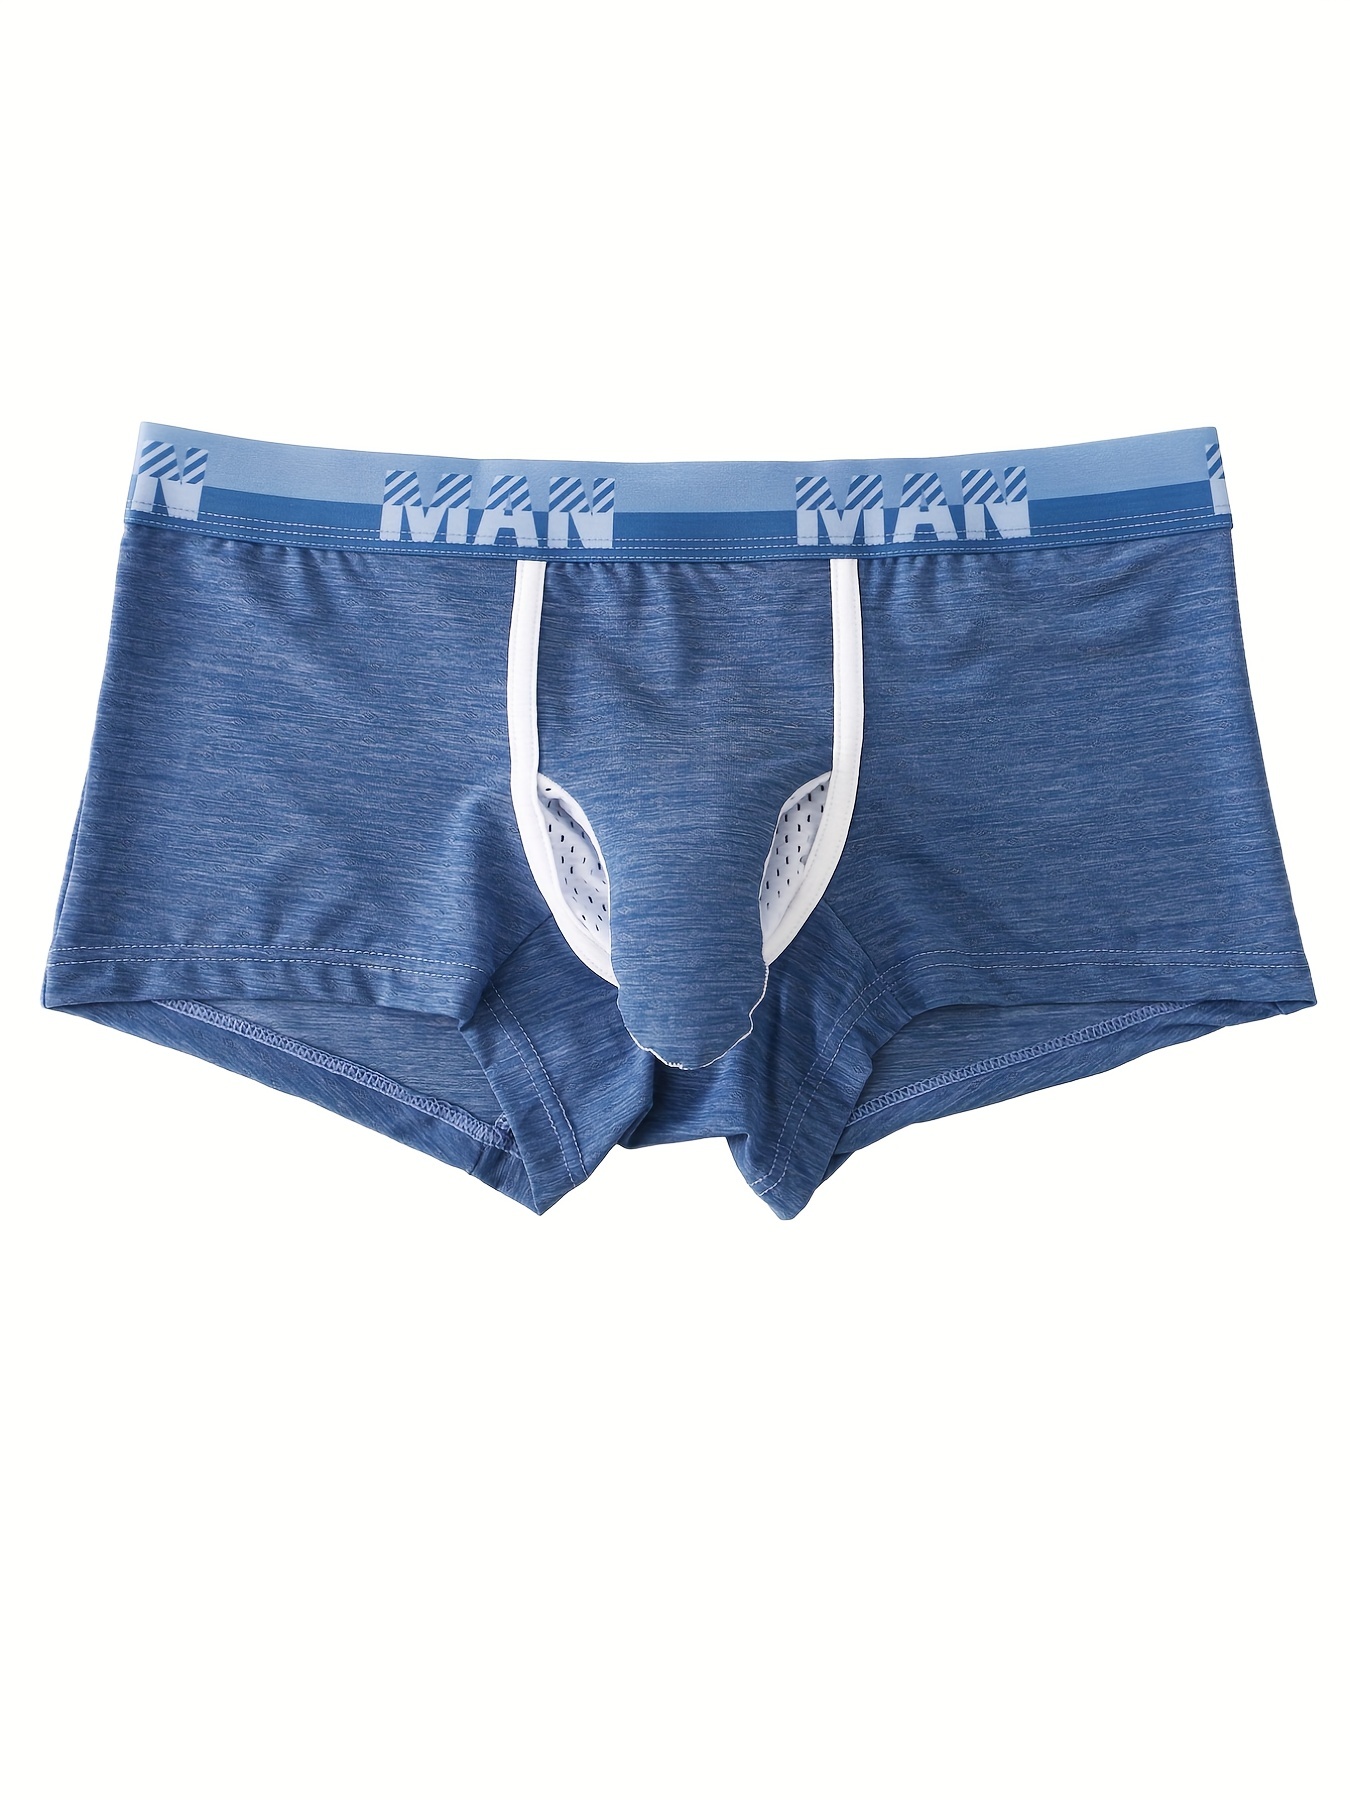 Elephant Underwear Men - Temu